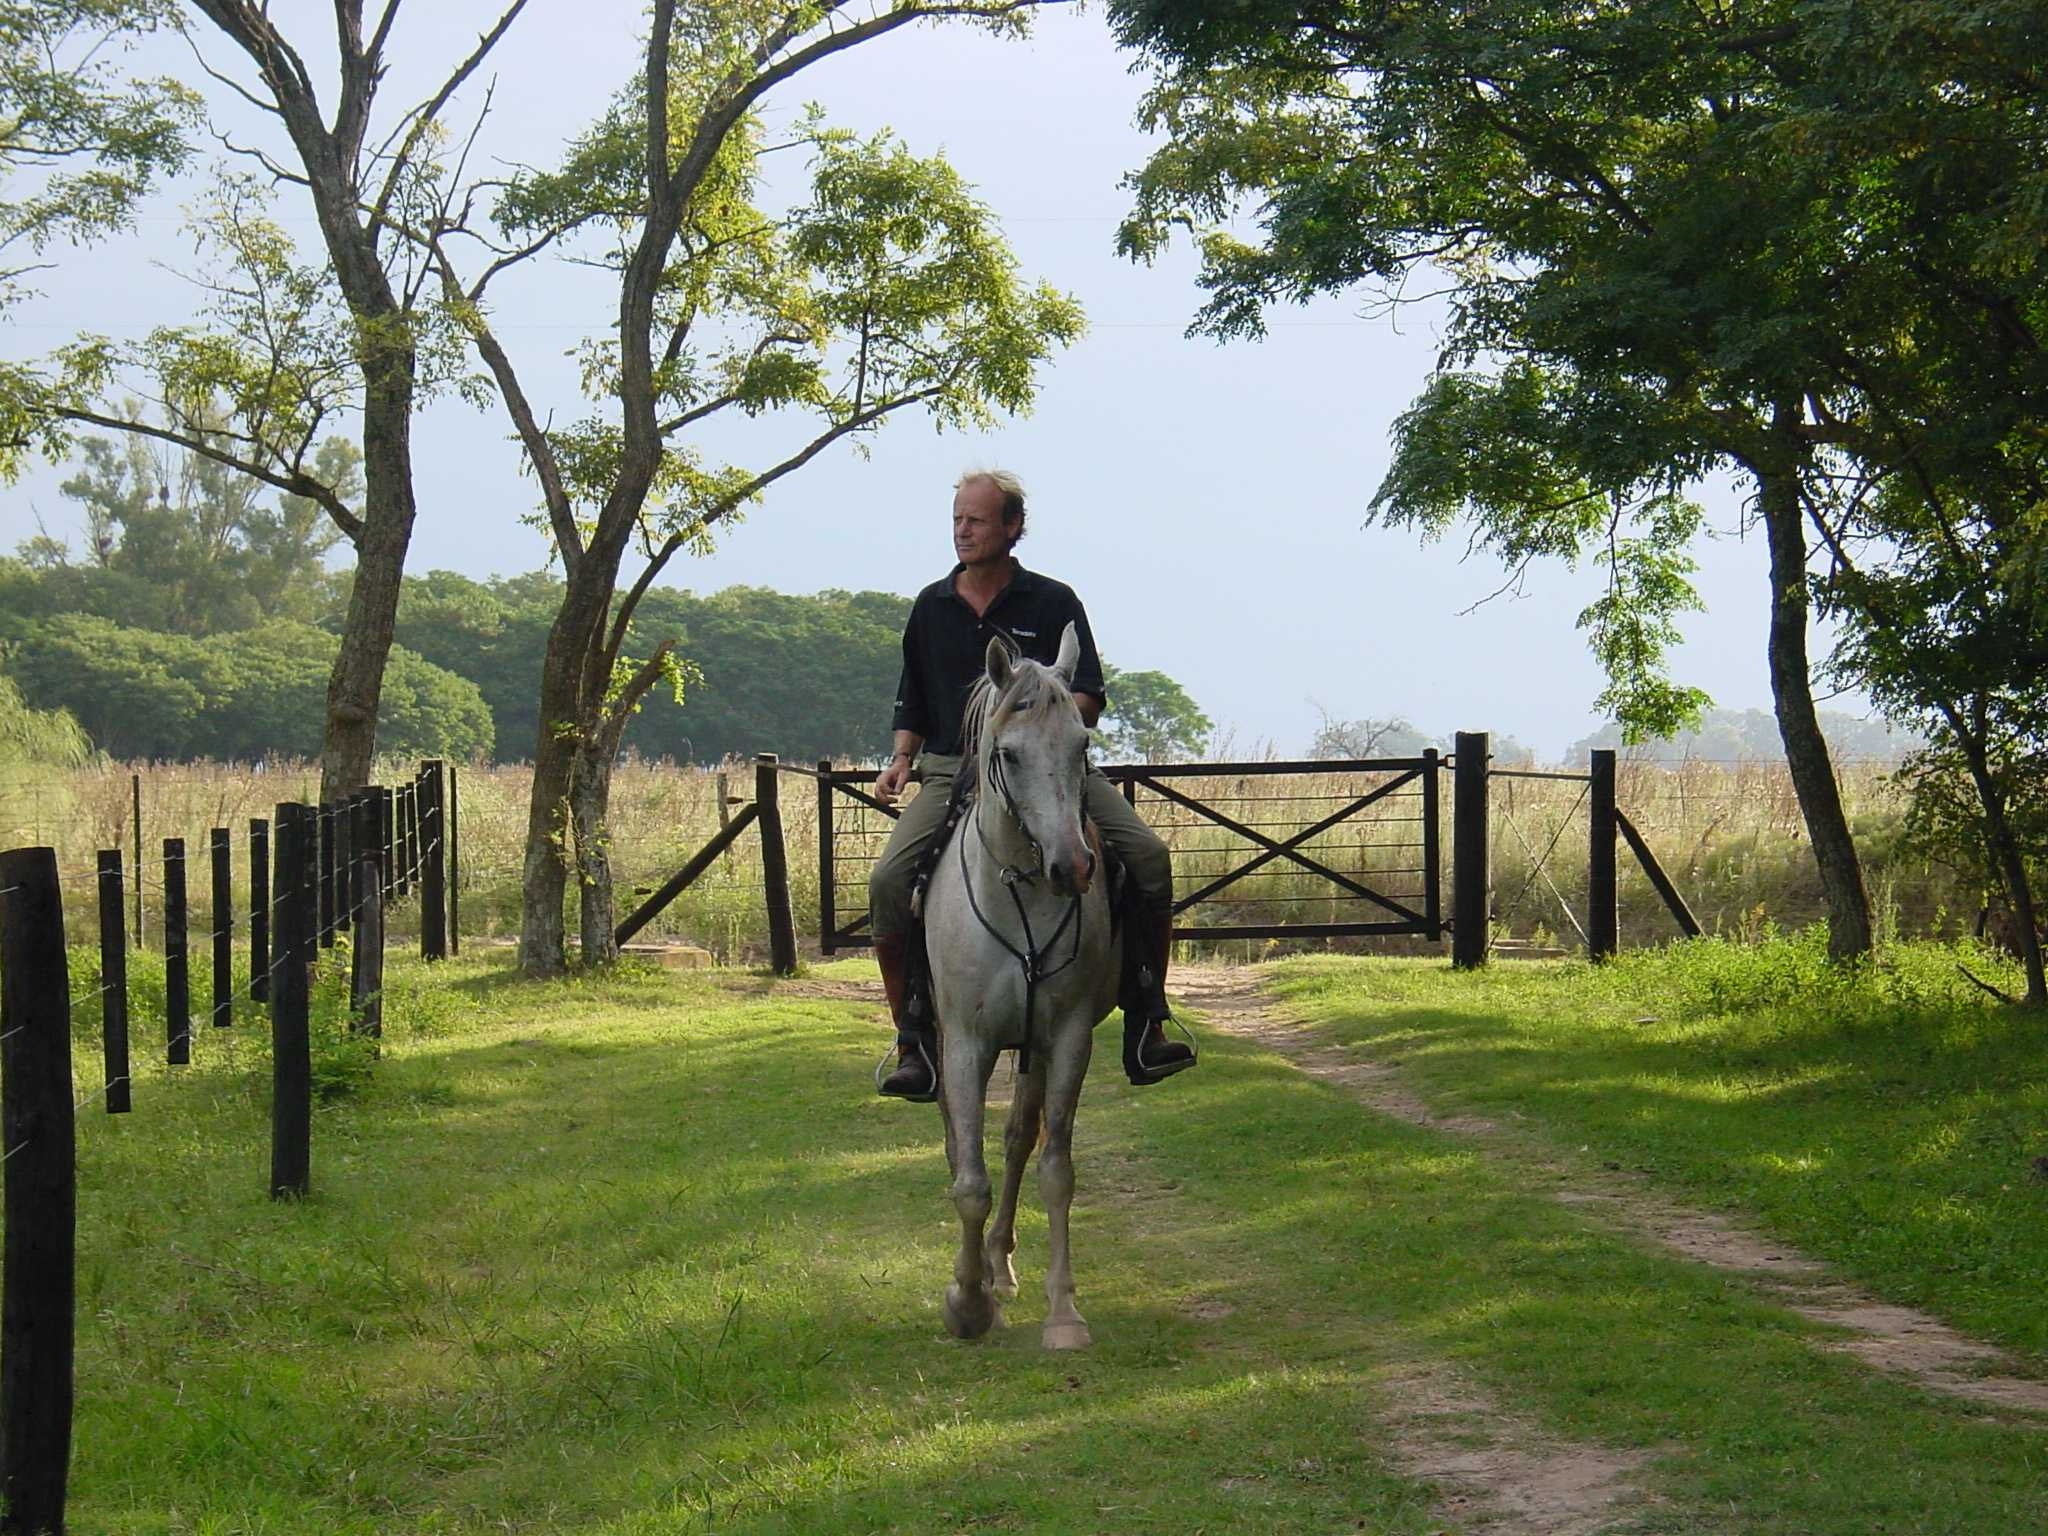 Estancias and horseback riding in Argentina